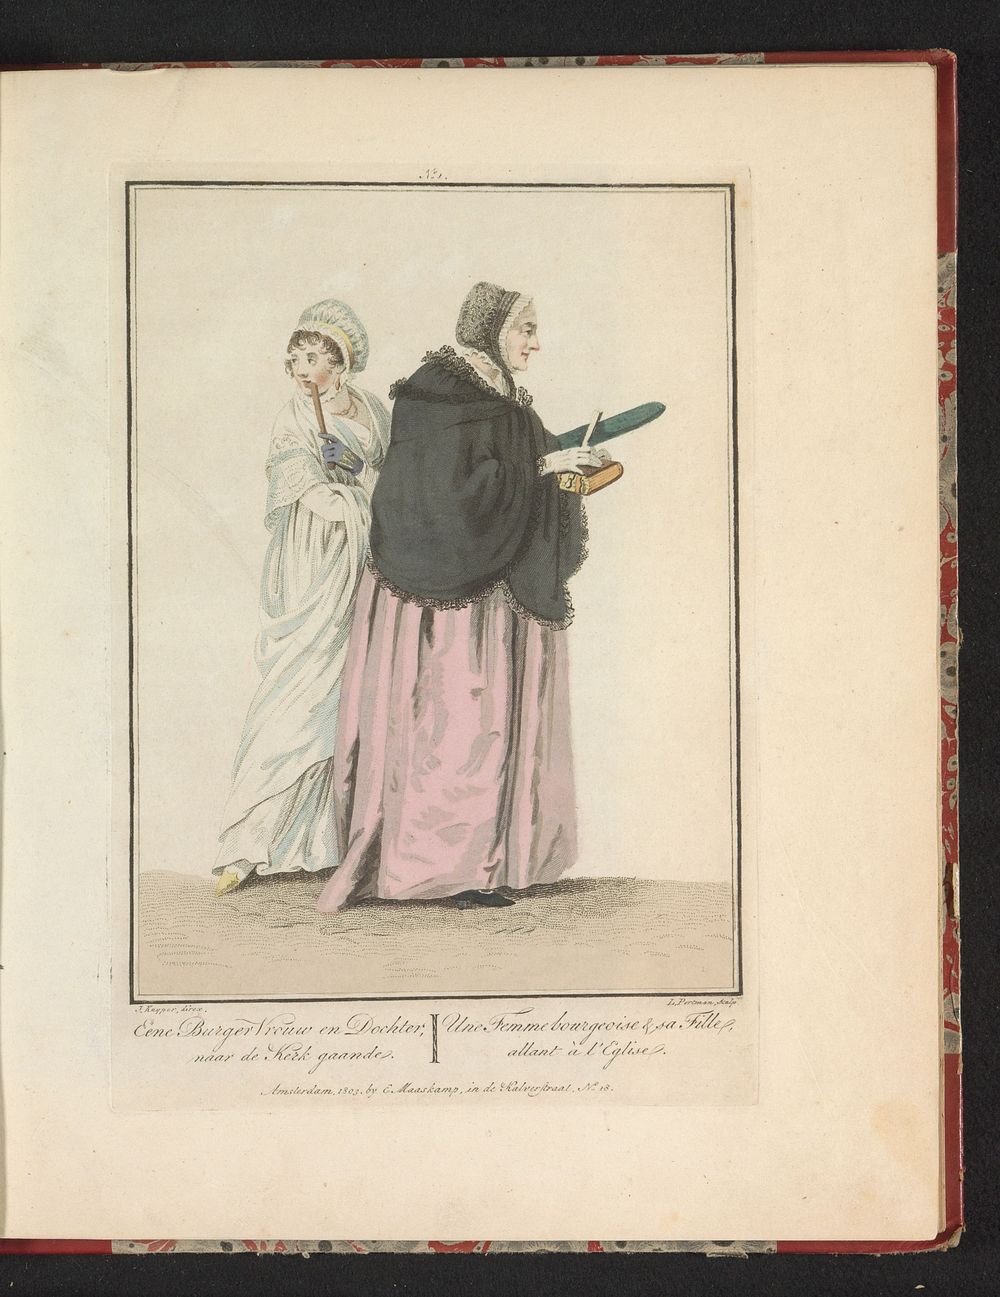 Moeder en dochter op weg naar de kerk (1803) by Ludwig Gottlieb Portman, Jacques Kuyper, Jan Willem Pieneman, Jacques Kuyper…